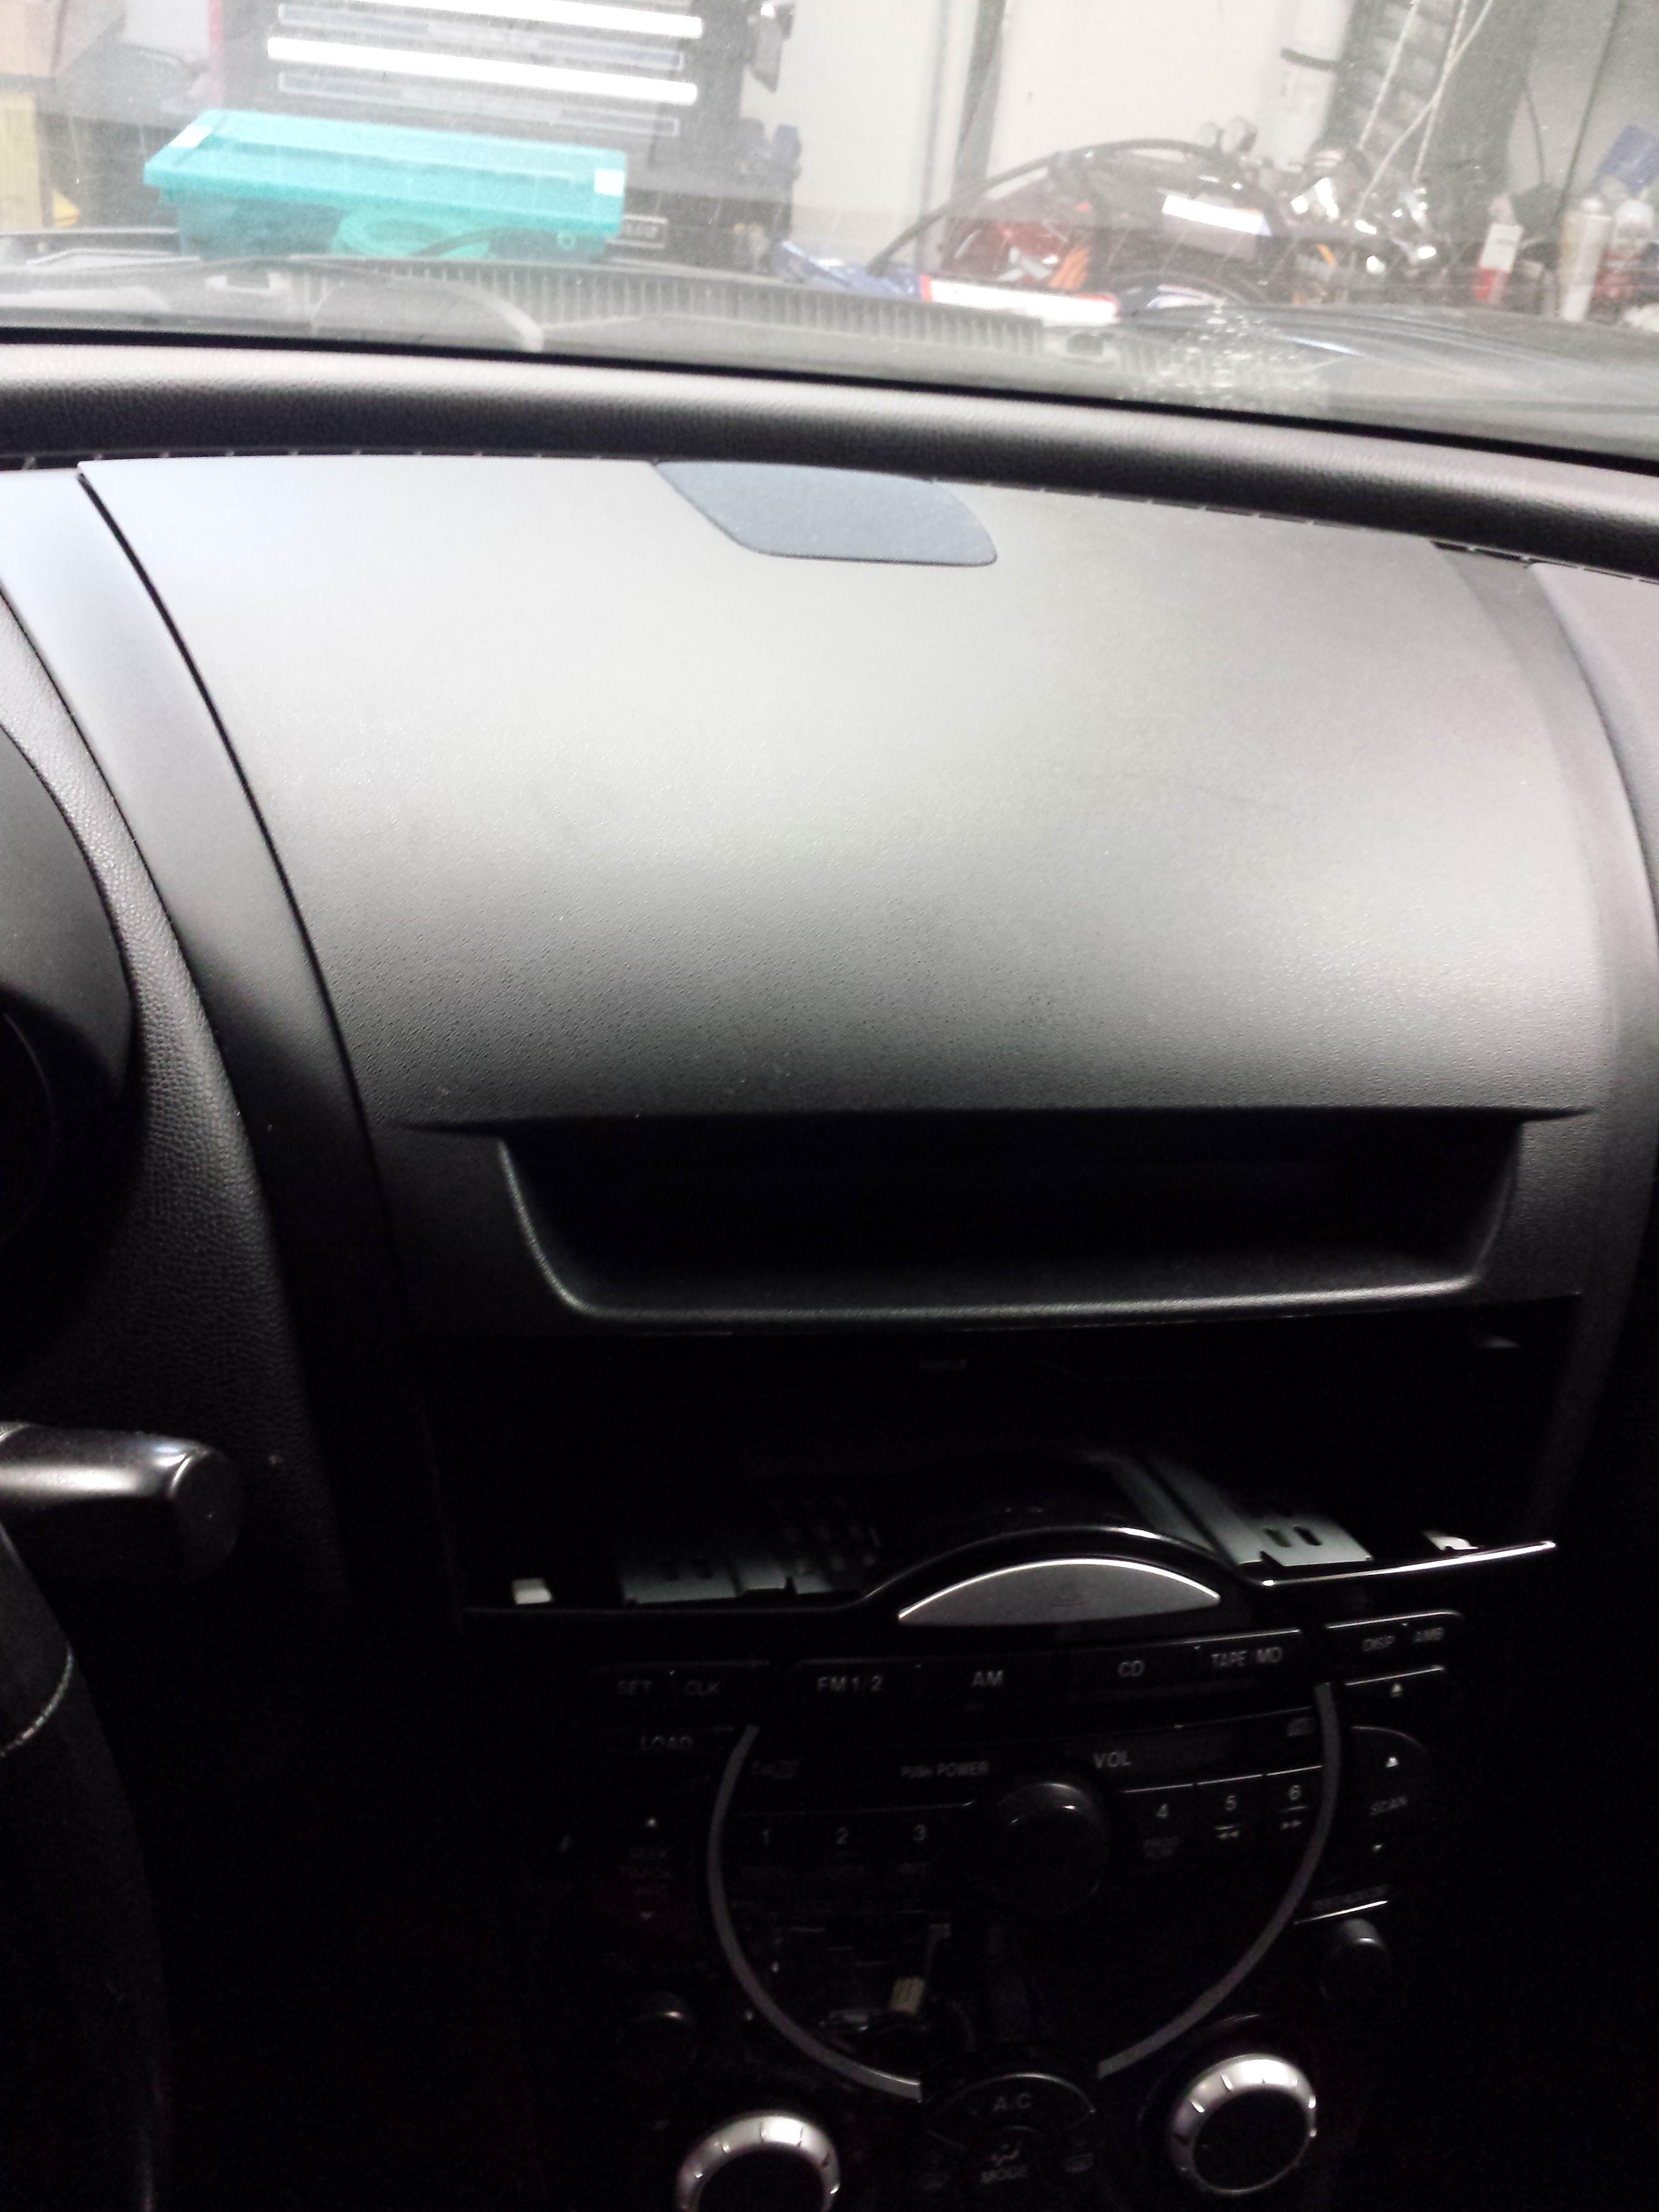 Conversion complète en emplacement radio 2 DIN Audi A4 8E + Cabrio